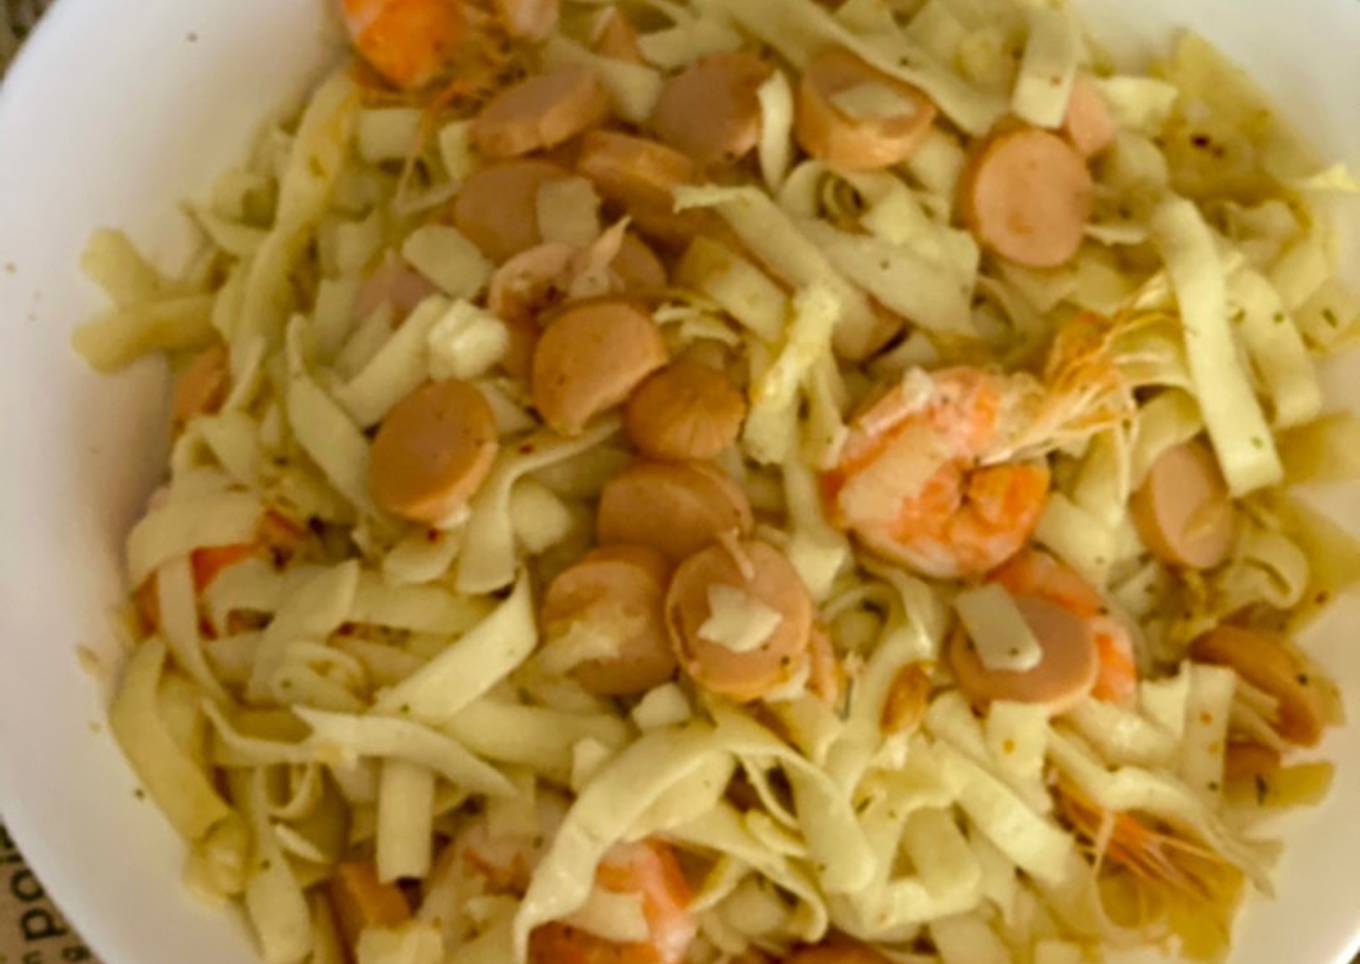 Resepi Spinach pasta Aglio e olio 🇮🇹 yang Memang Lazat dan Easy